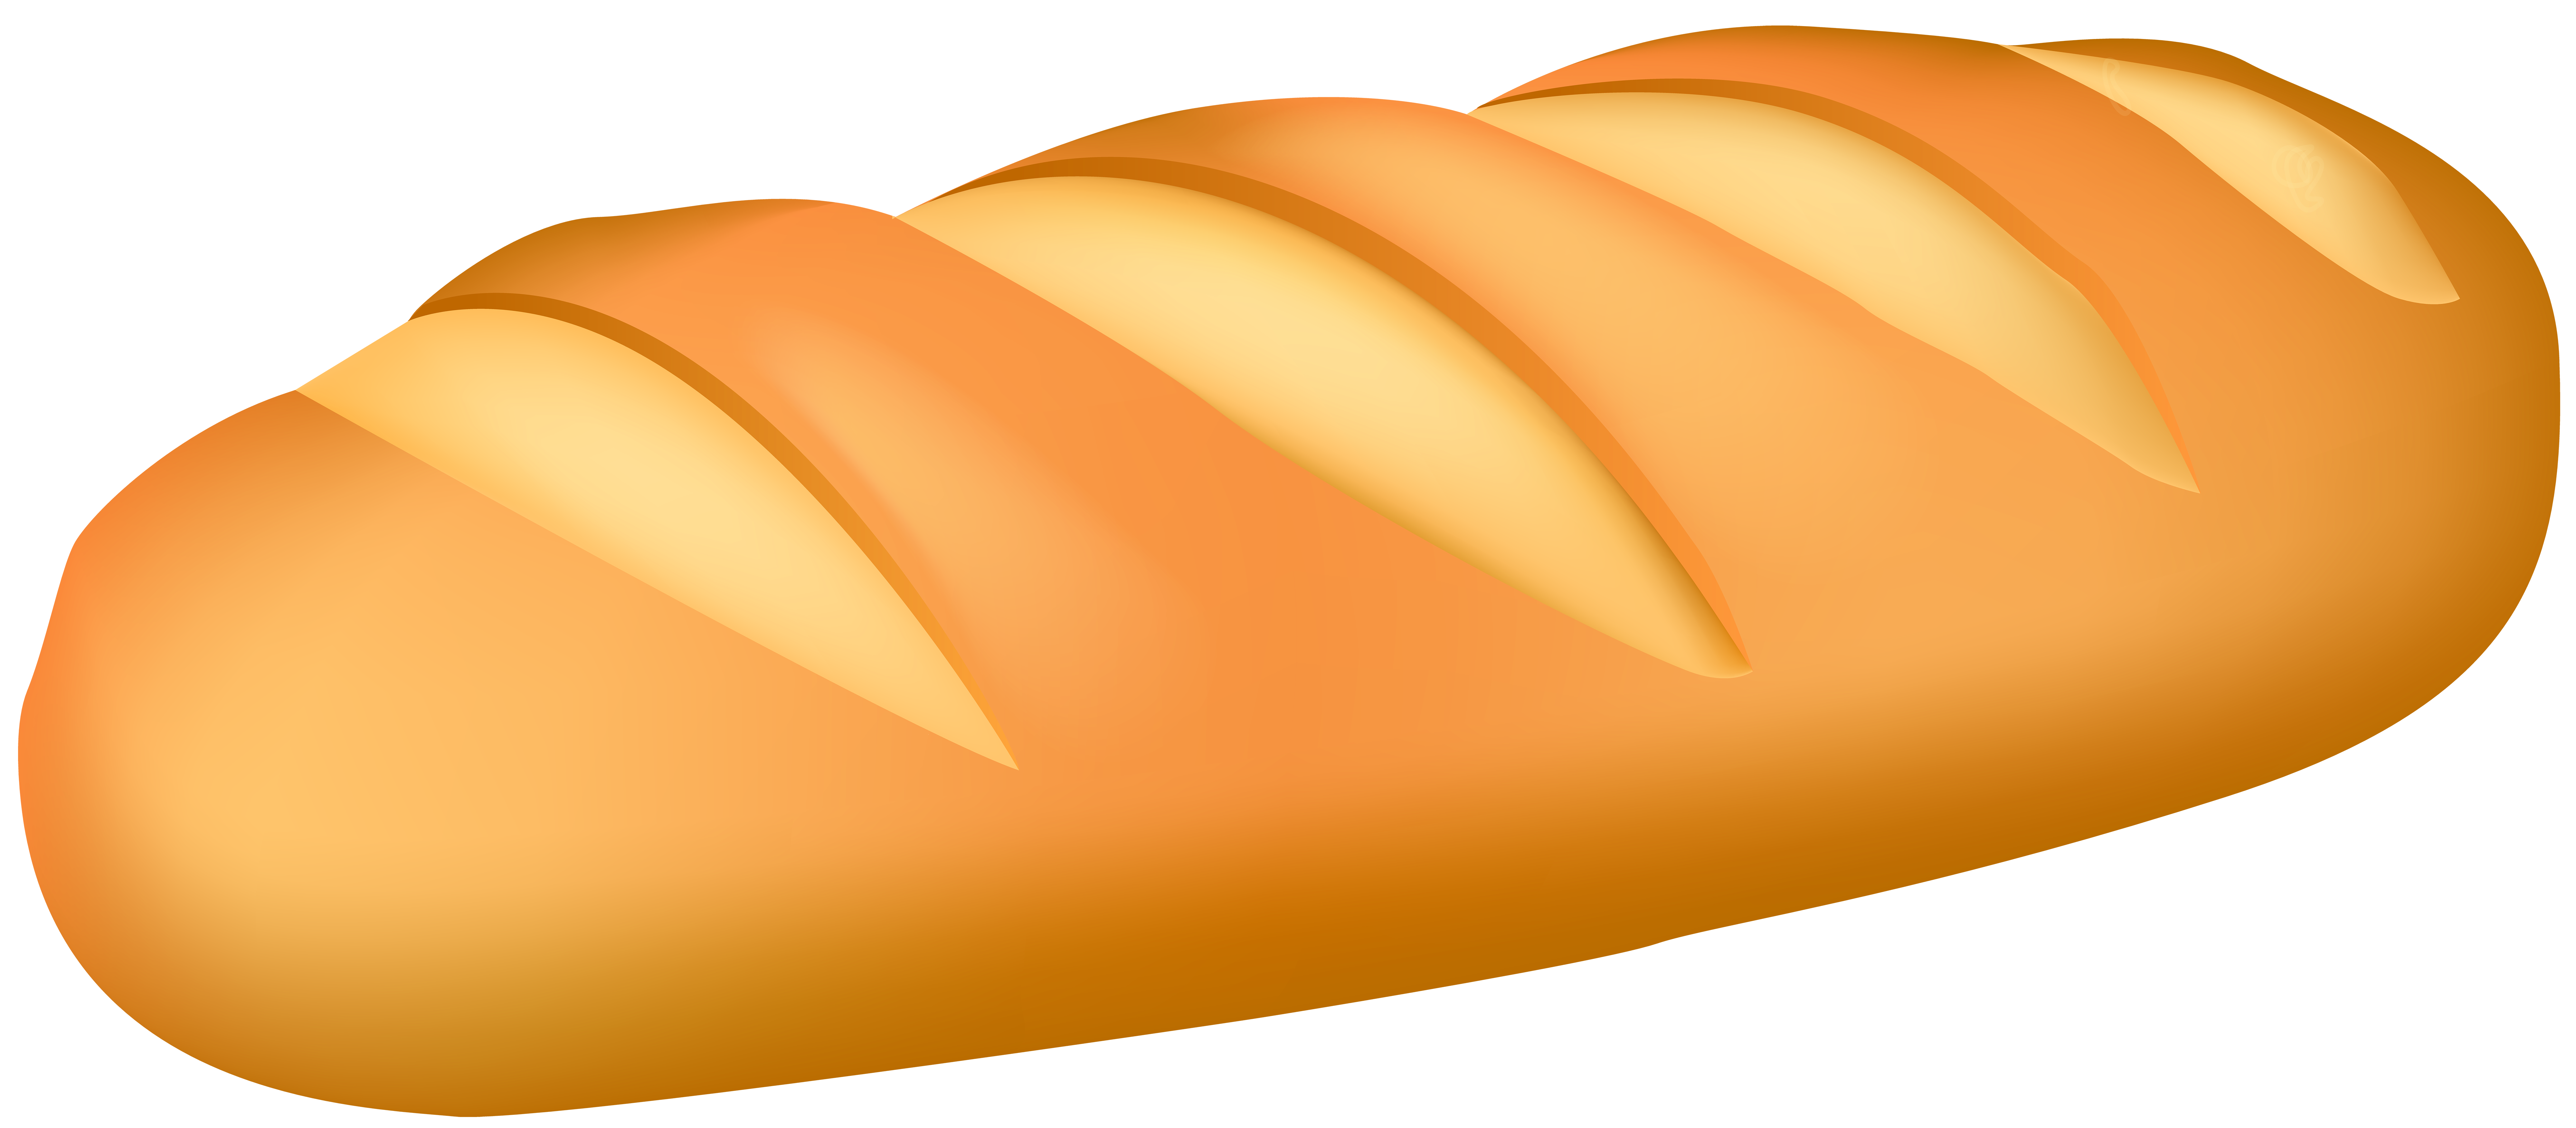 loaf clipart